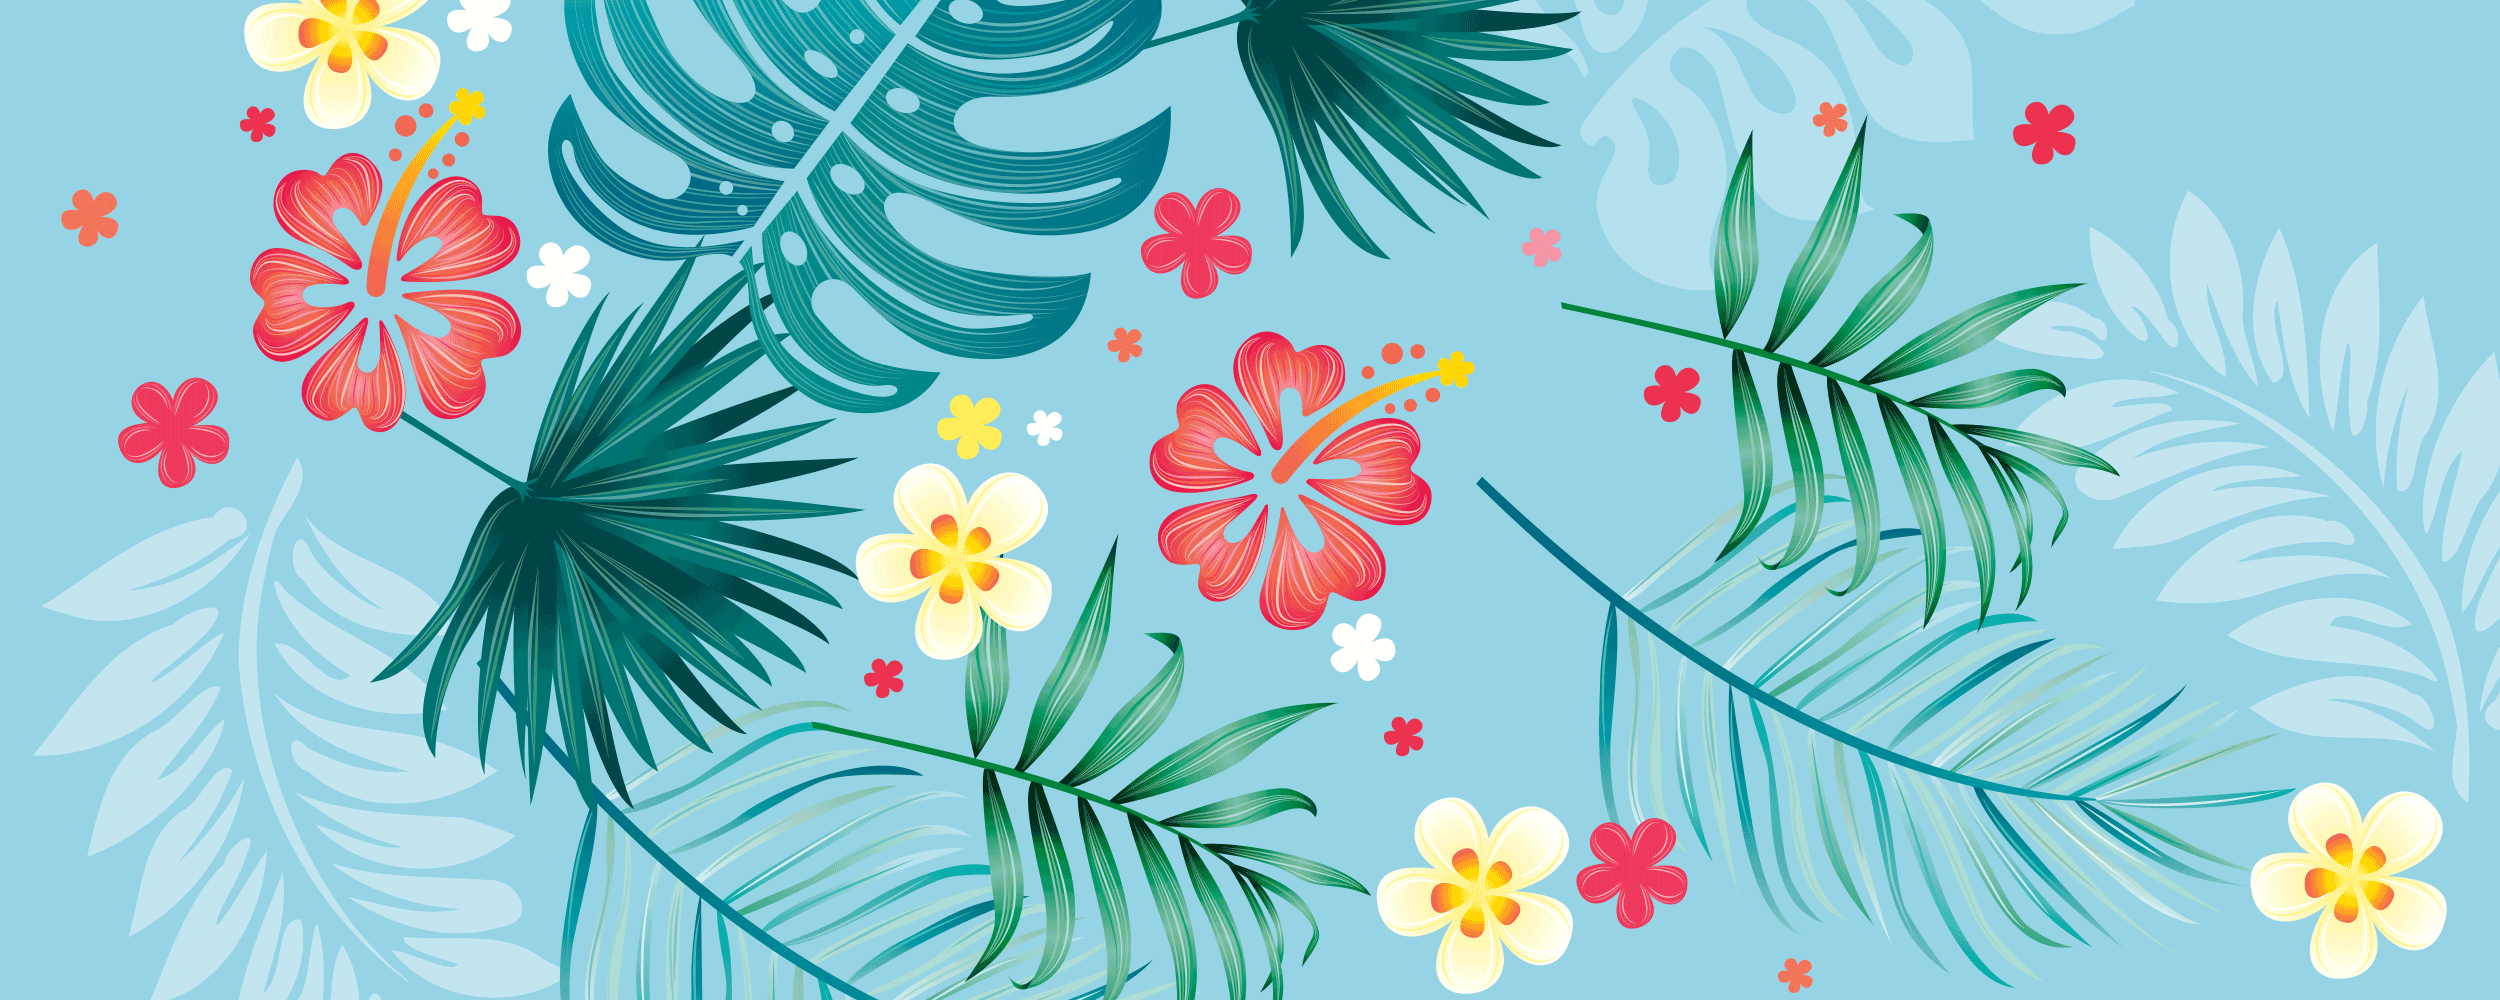 Creating Tropical Leaves Art Brushes in Adobe Illustrator